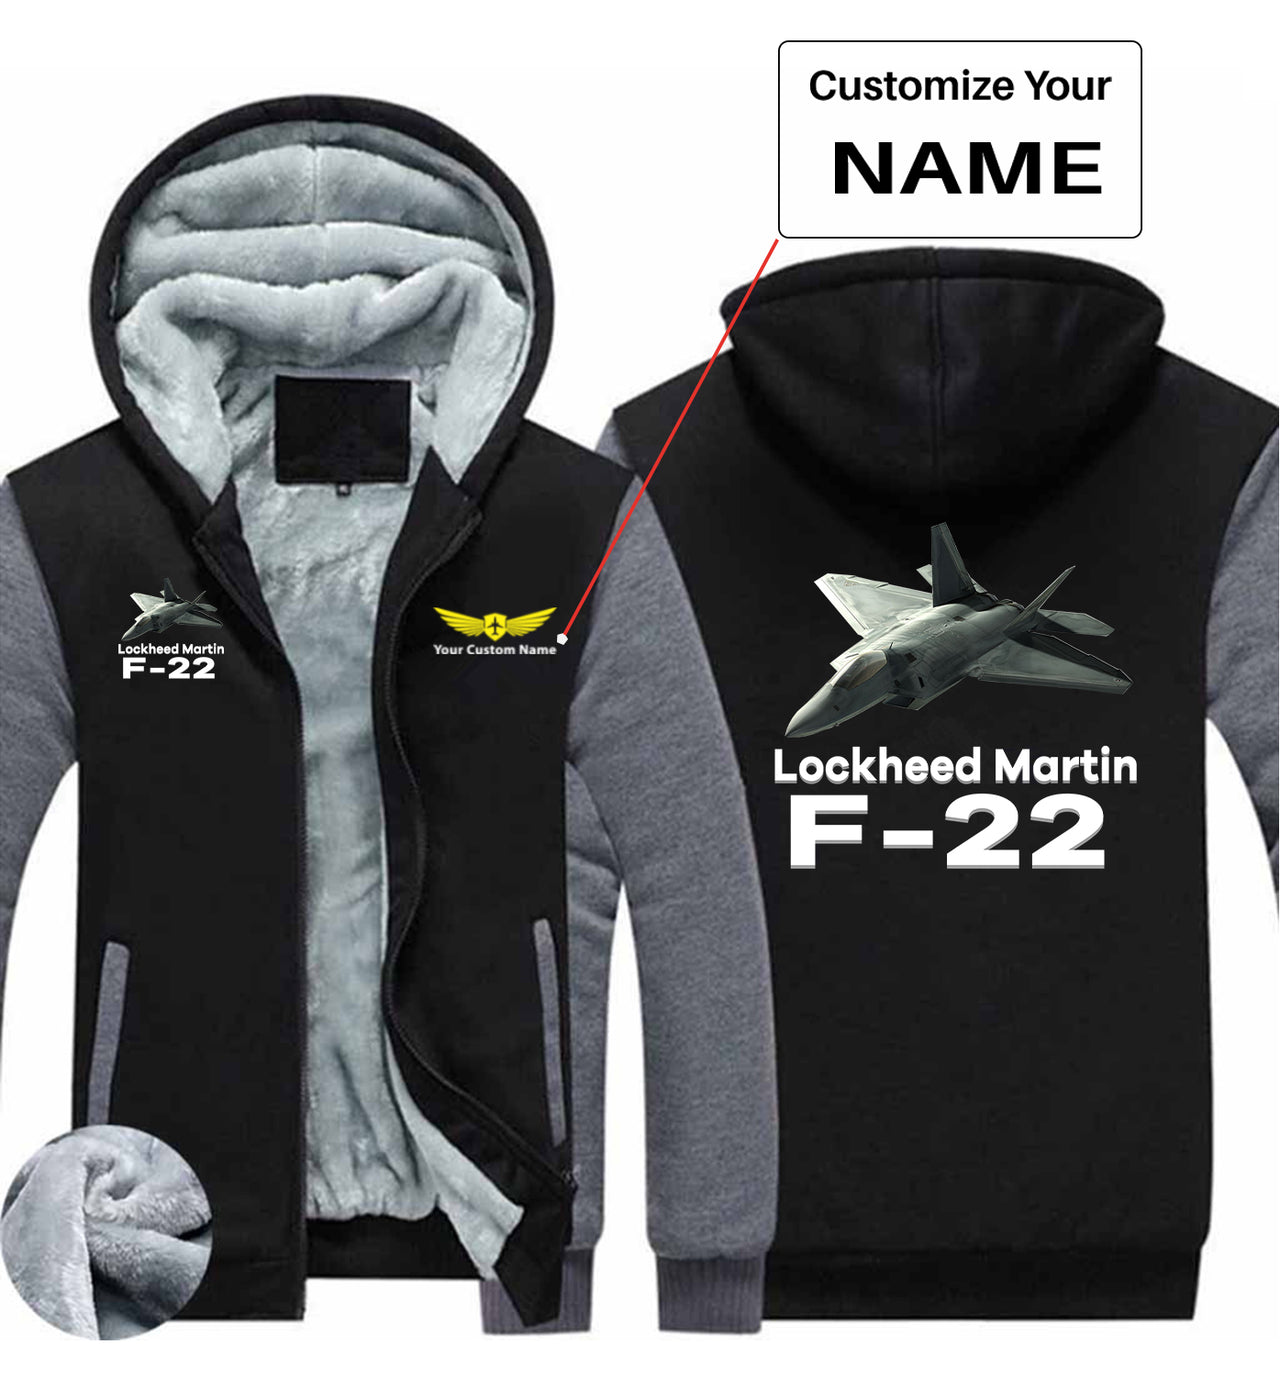 The Lockheed Martin F22 Designed Zipped Sweatshirts